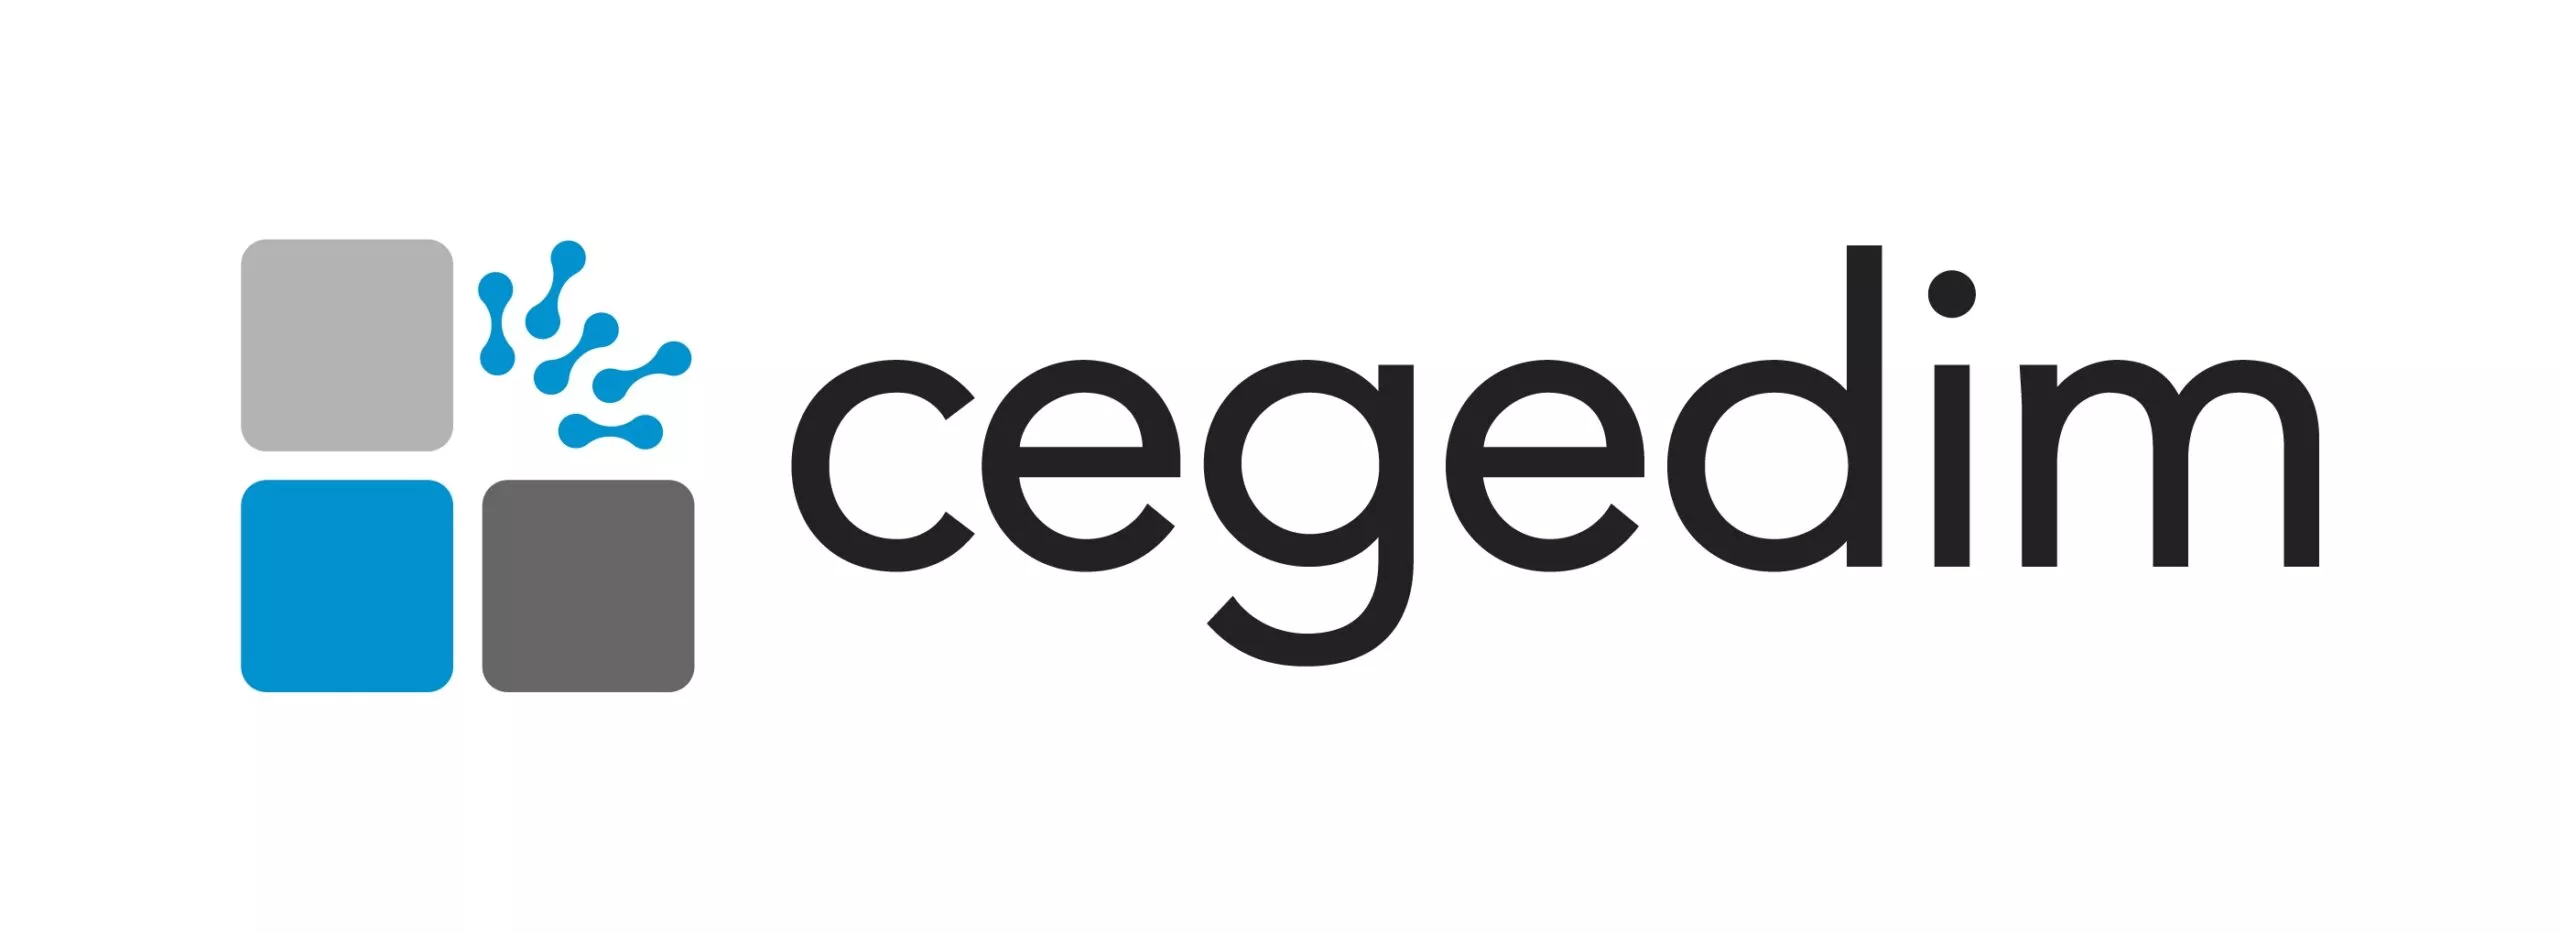 Cegedim logo & Ohana & co